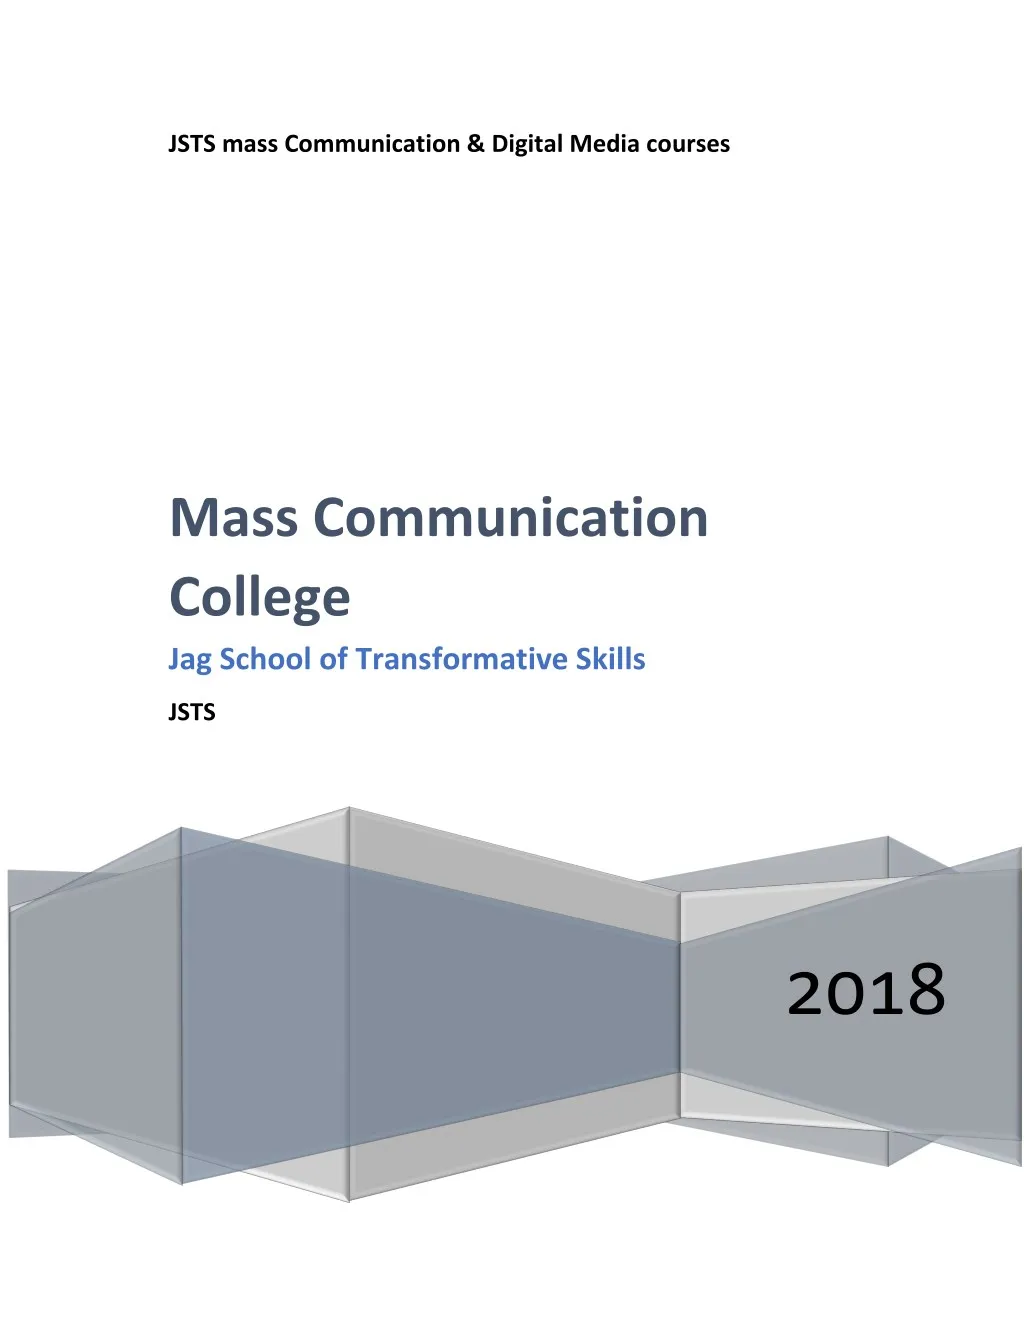 jsts mass communication digital media courses